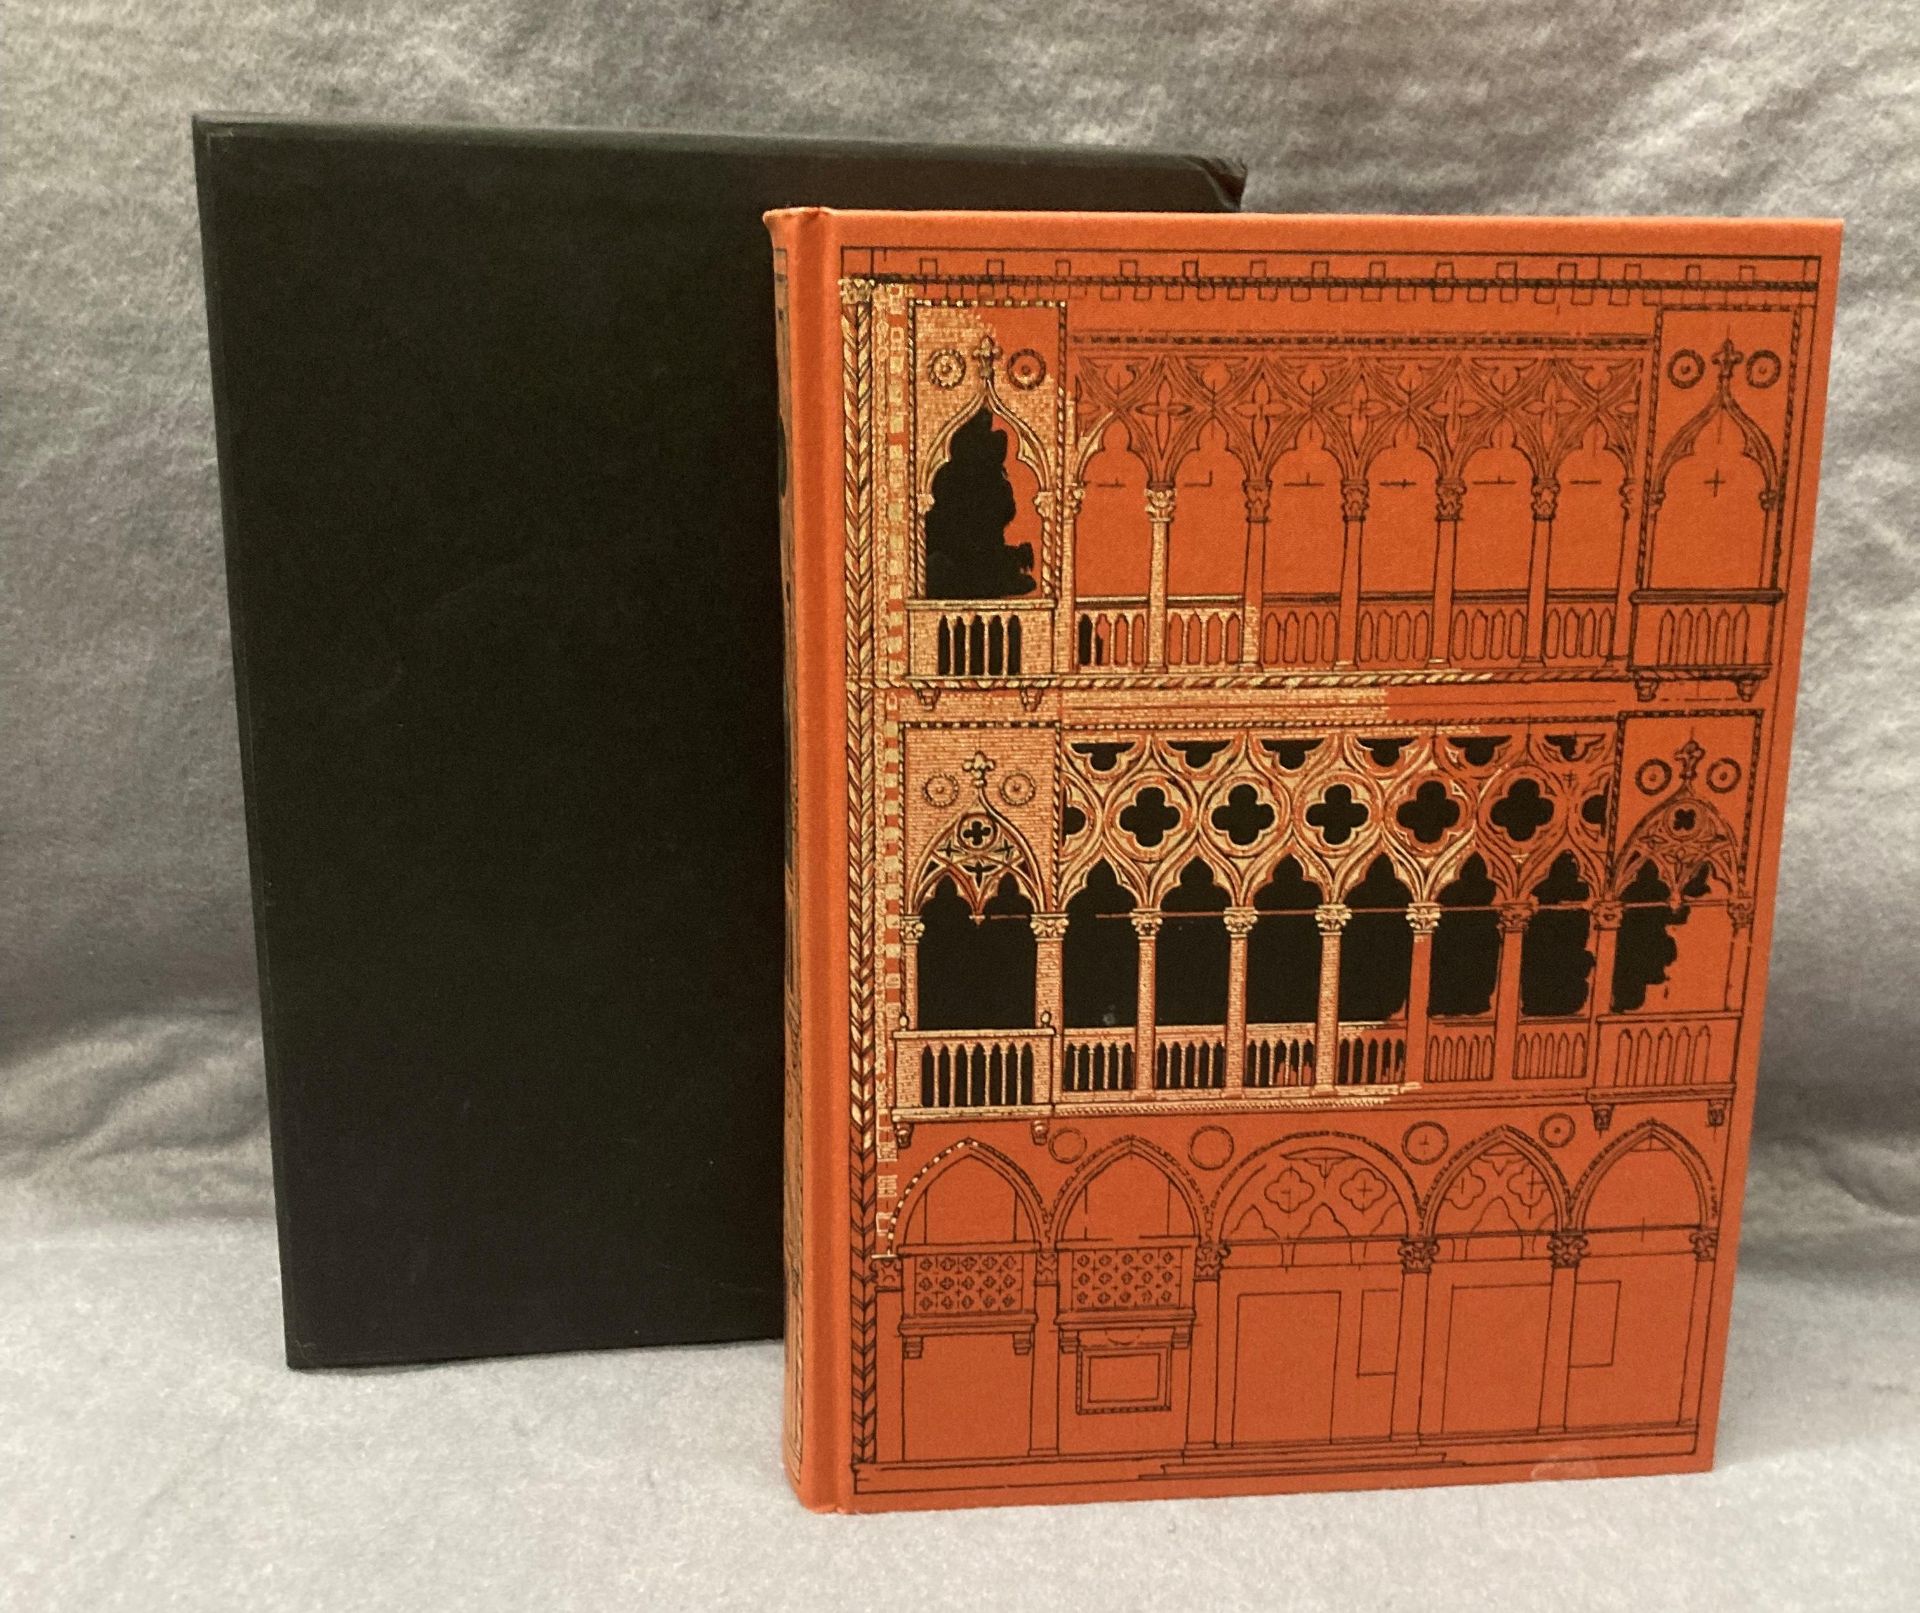 Four Folio Society books by John Ruskin 'The Stones of Venice' 2001, - Image 3 of 5